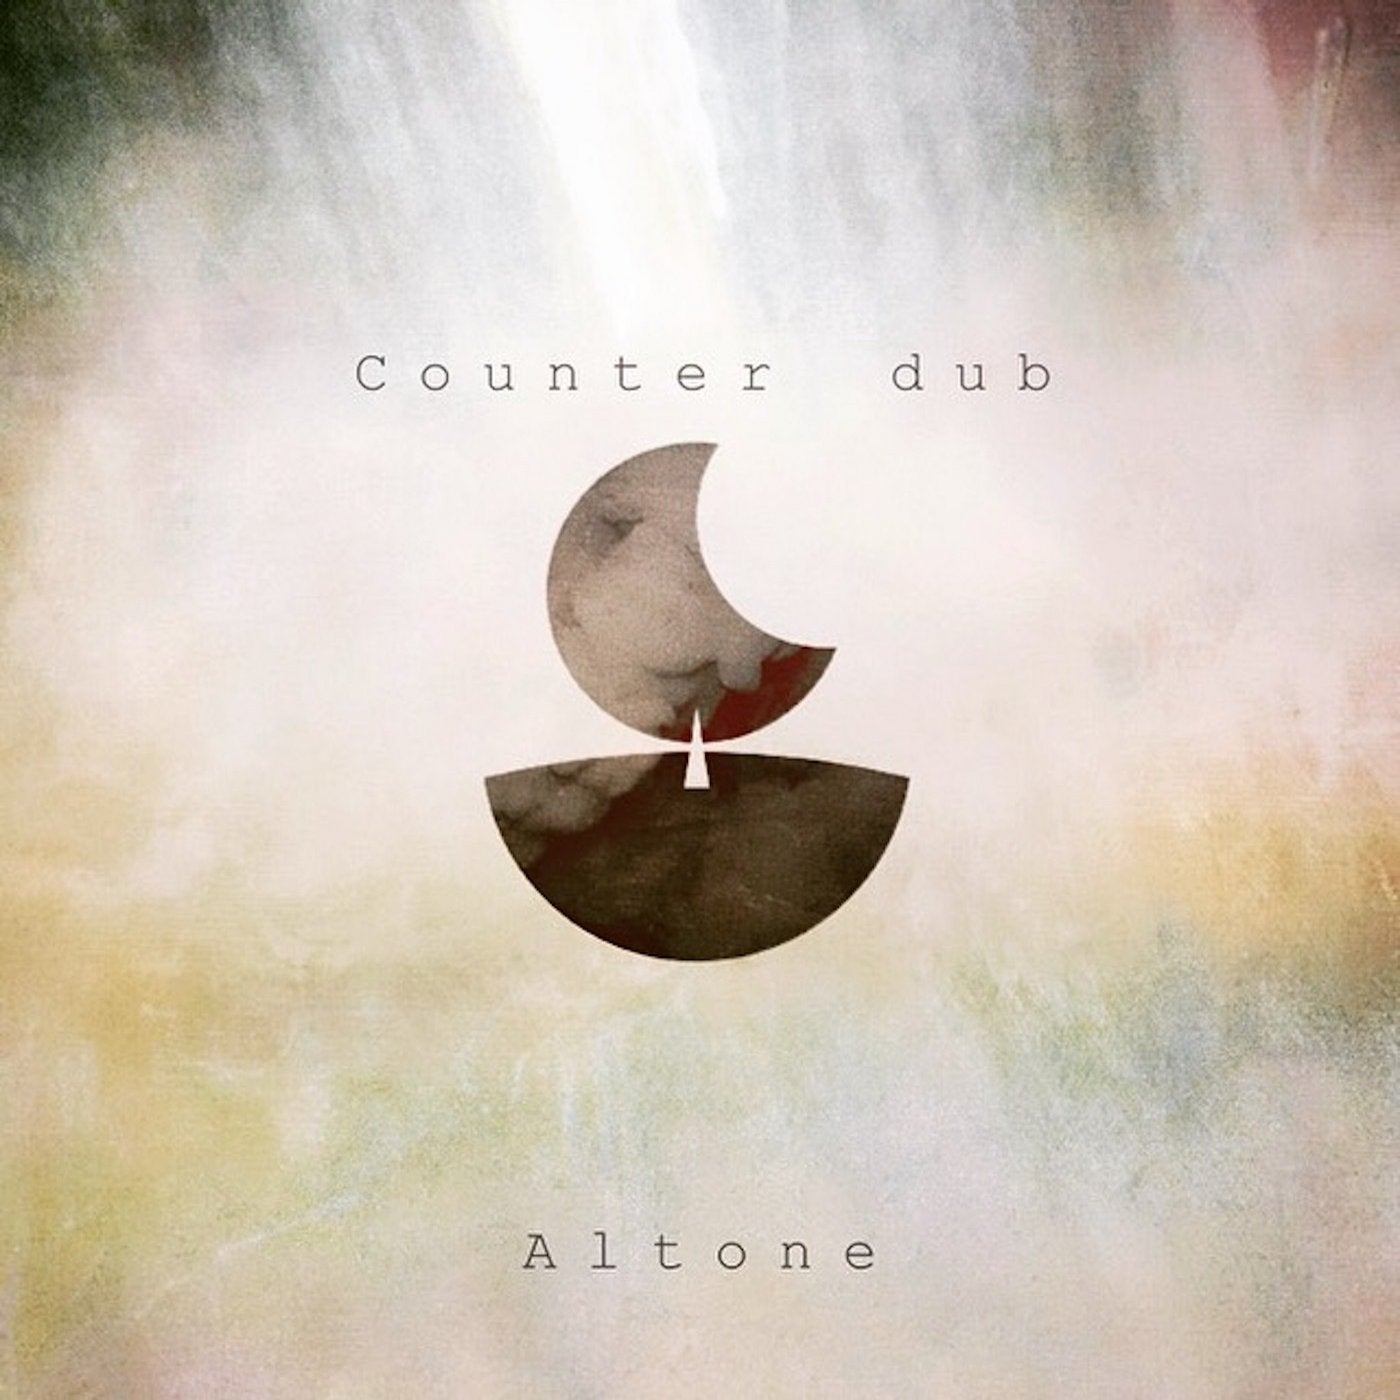 Counter dub